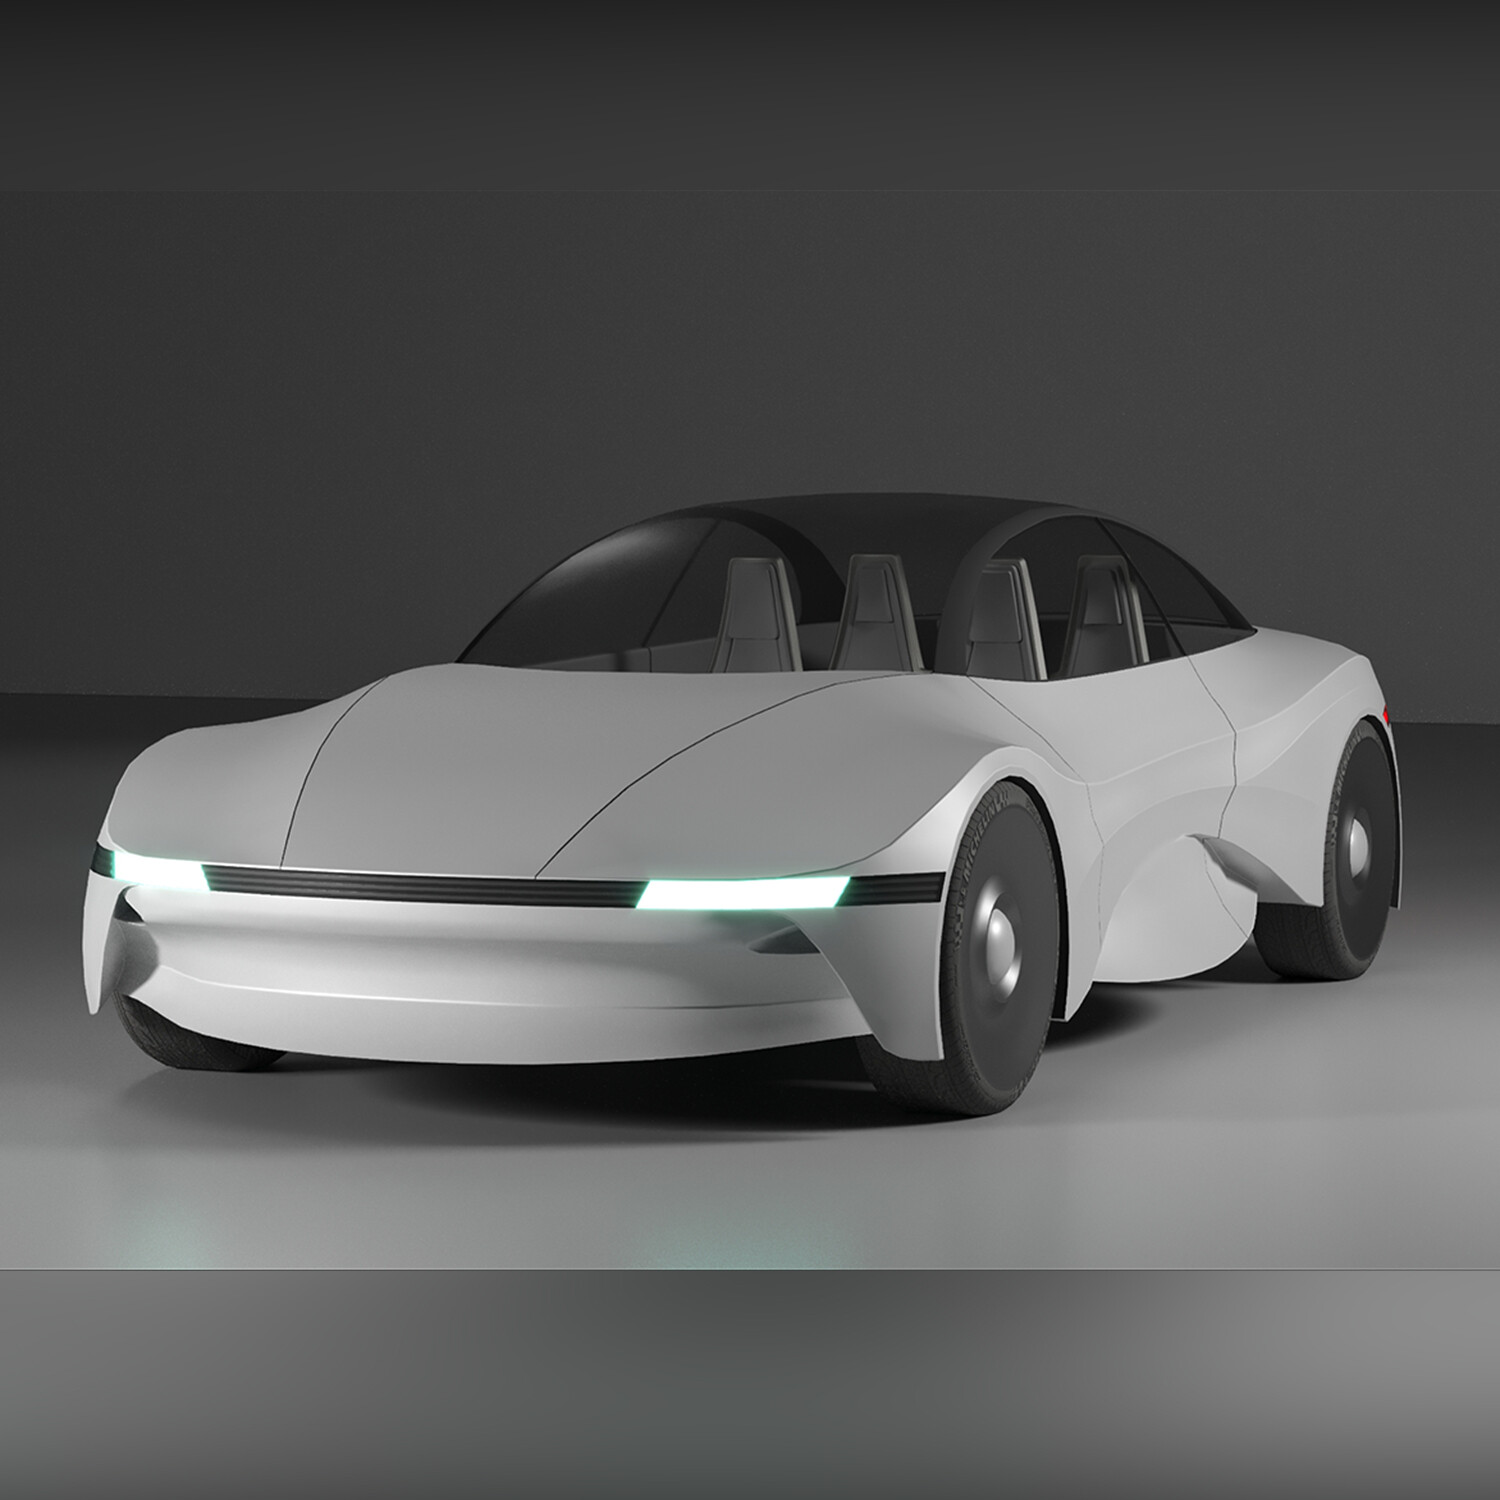 ArtStation - Apple iCar Concept Car (not official) - Game Asset